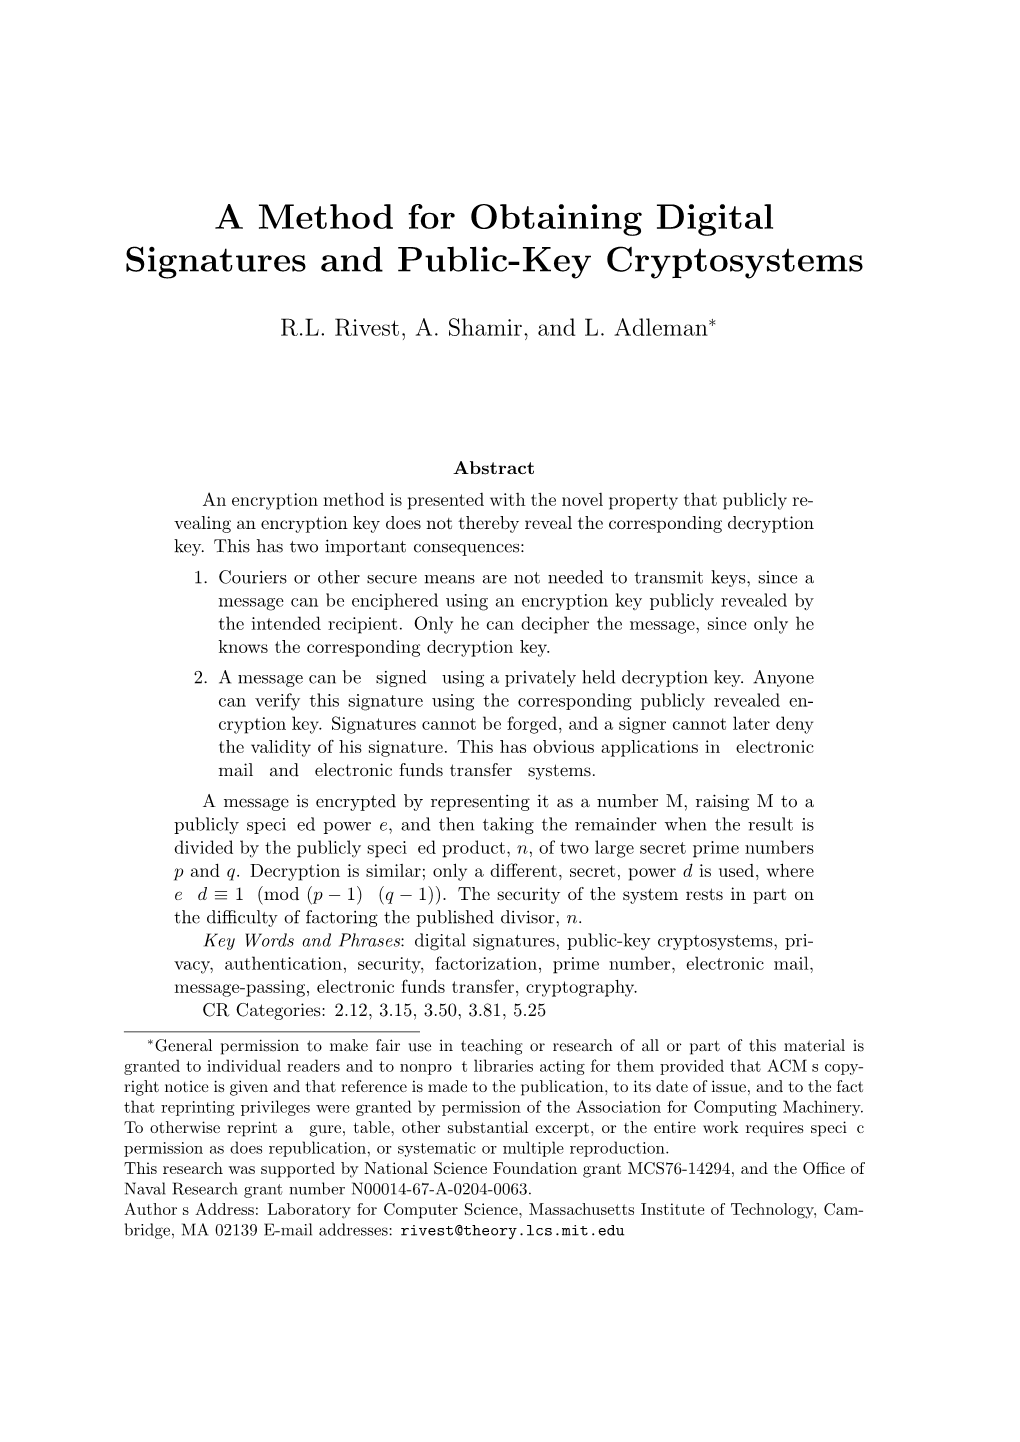 A Method for Obtaining Digital Signatures and Public-Key Cryptosystems